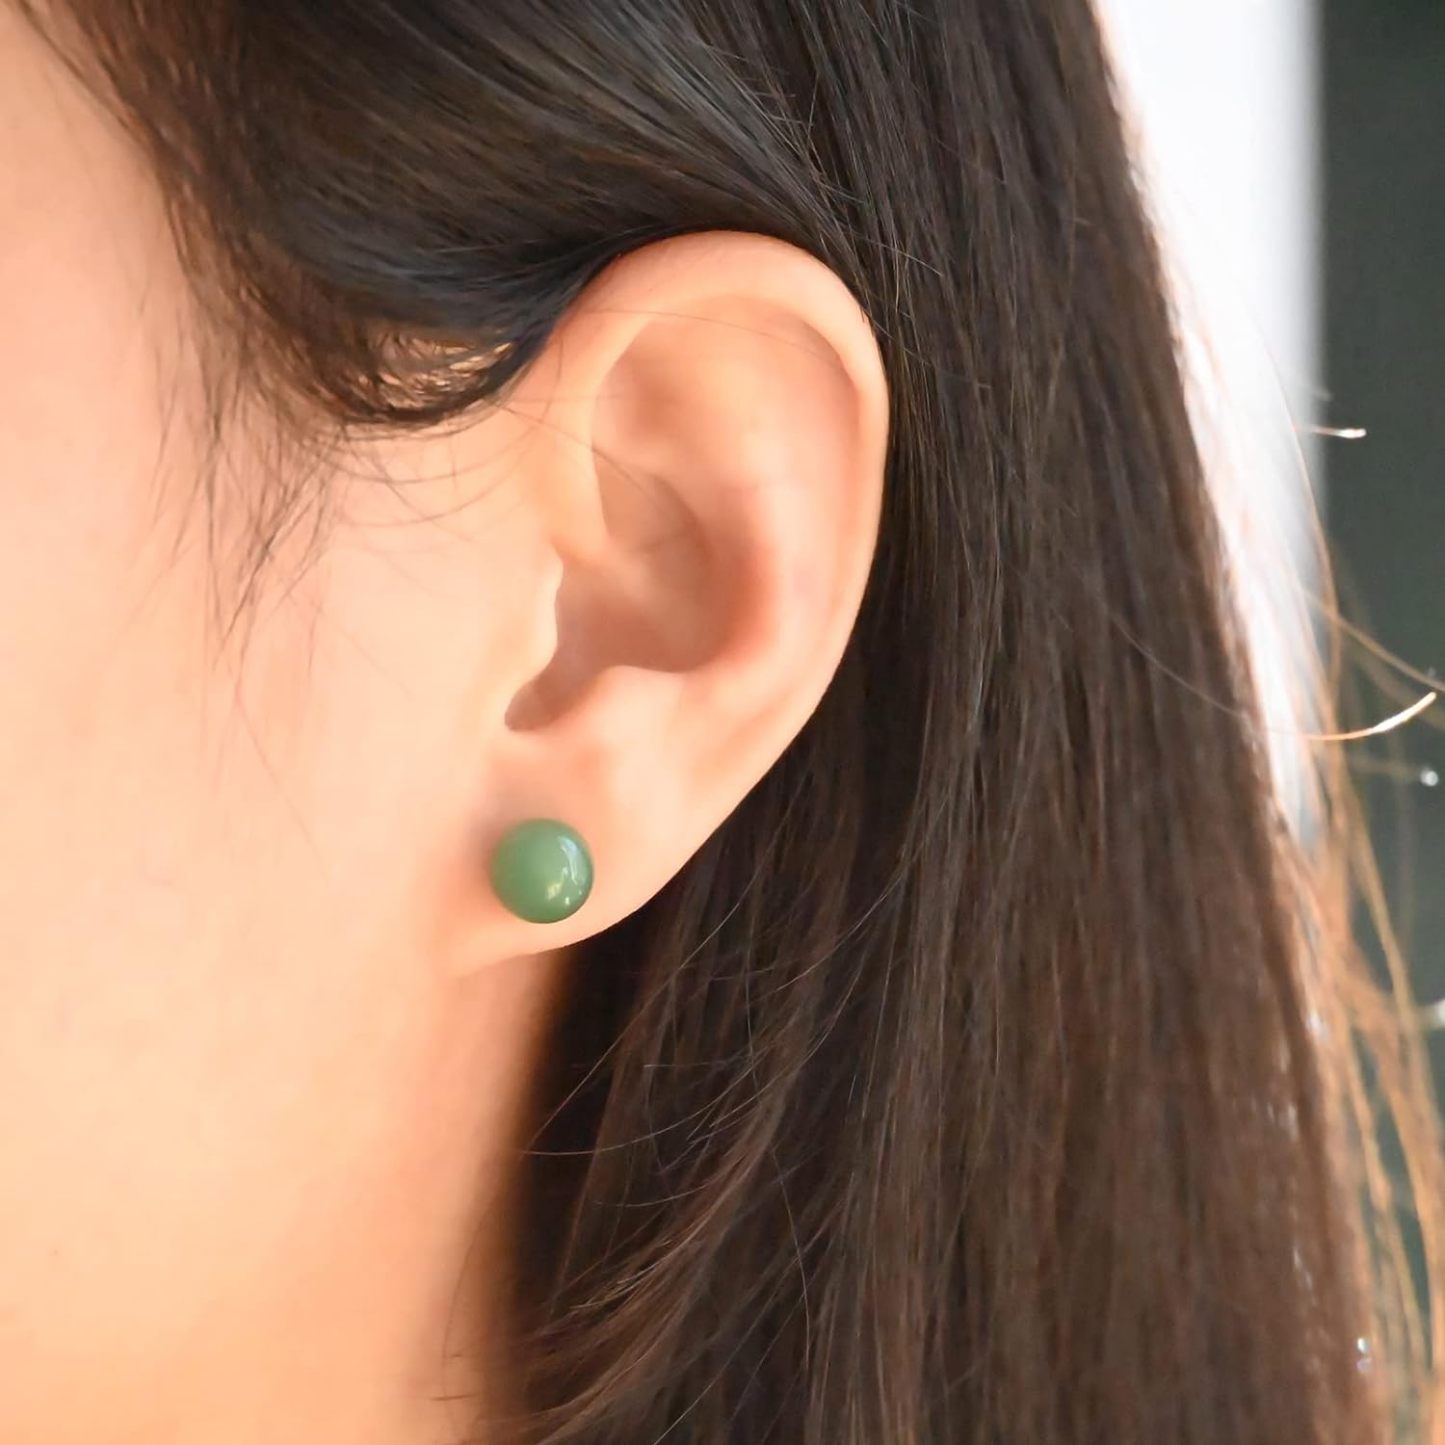 Jade Stud Earrings, 8mm Green Jade Earrings for Women, 925 Sterling Silver Earrings Studs for Sensitive Ears, Jade Jewelry for Women & Men, Good Luck Handmade Earrings Gift for Birthday